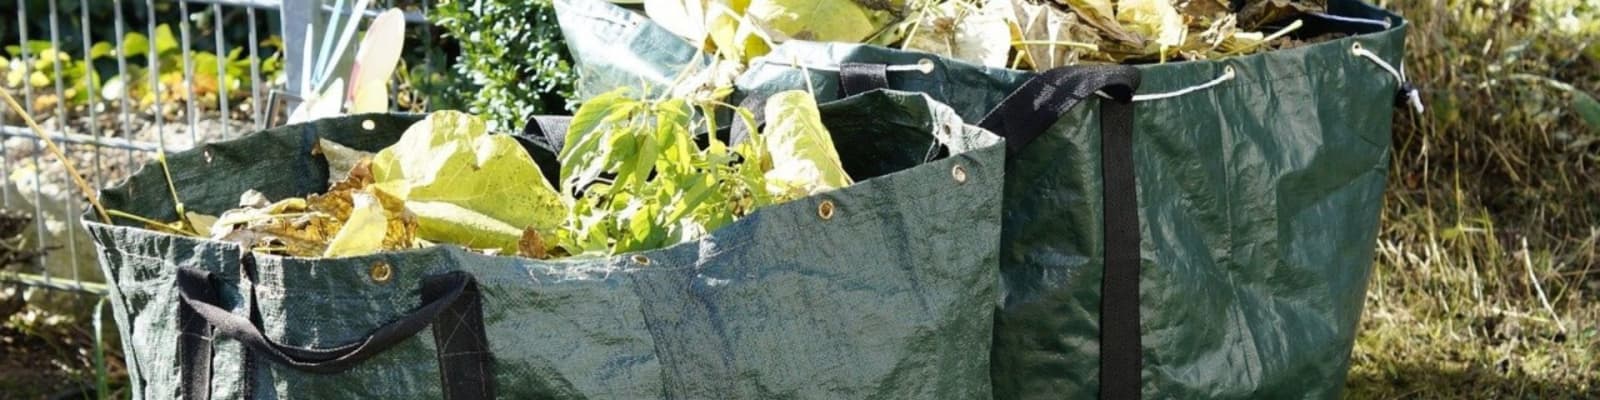 garden refuse removal pros in Germiston